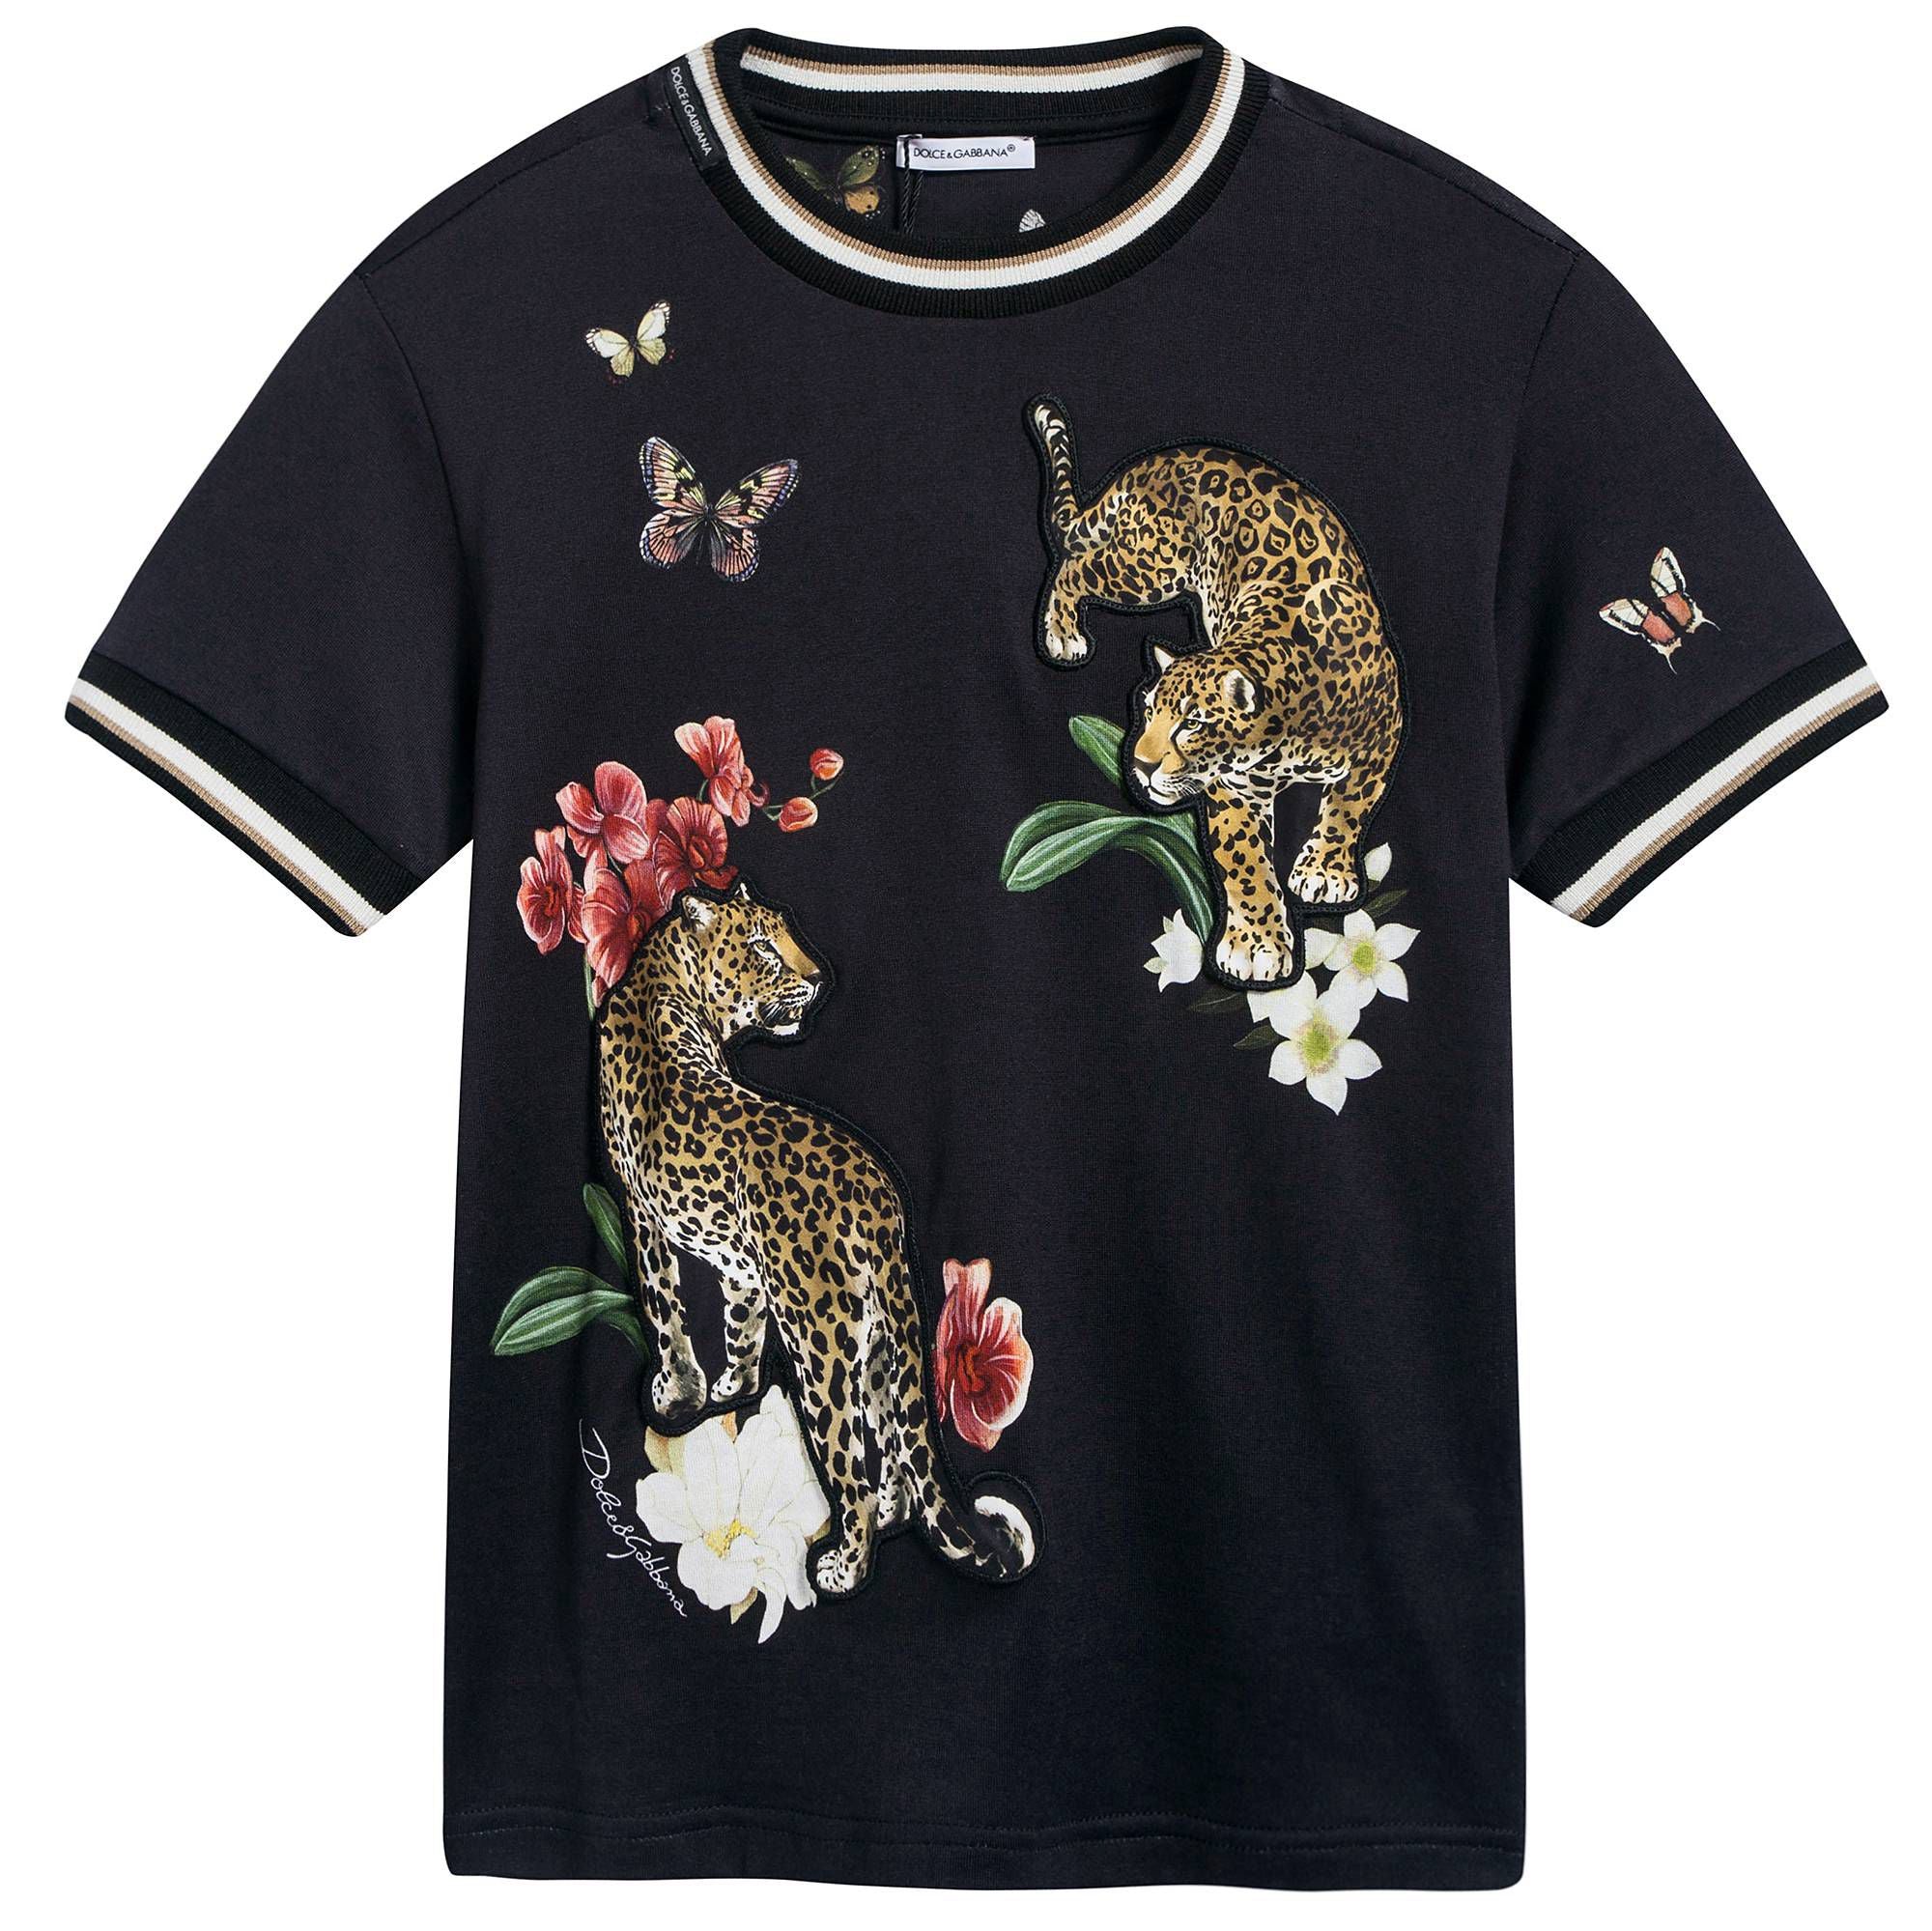 Boys Black "Leopard  Printed" Cotton T-shirt